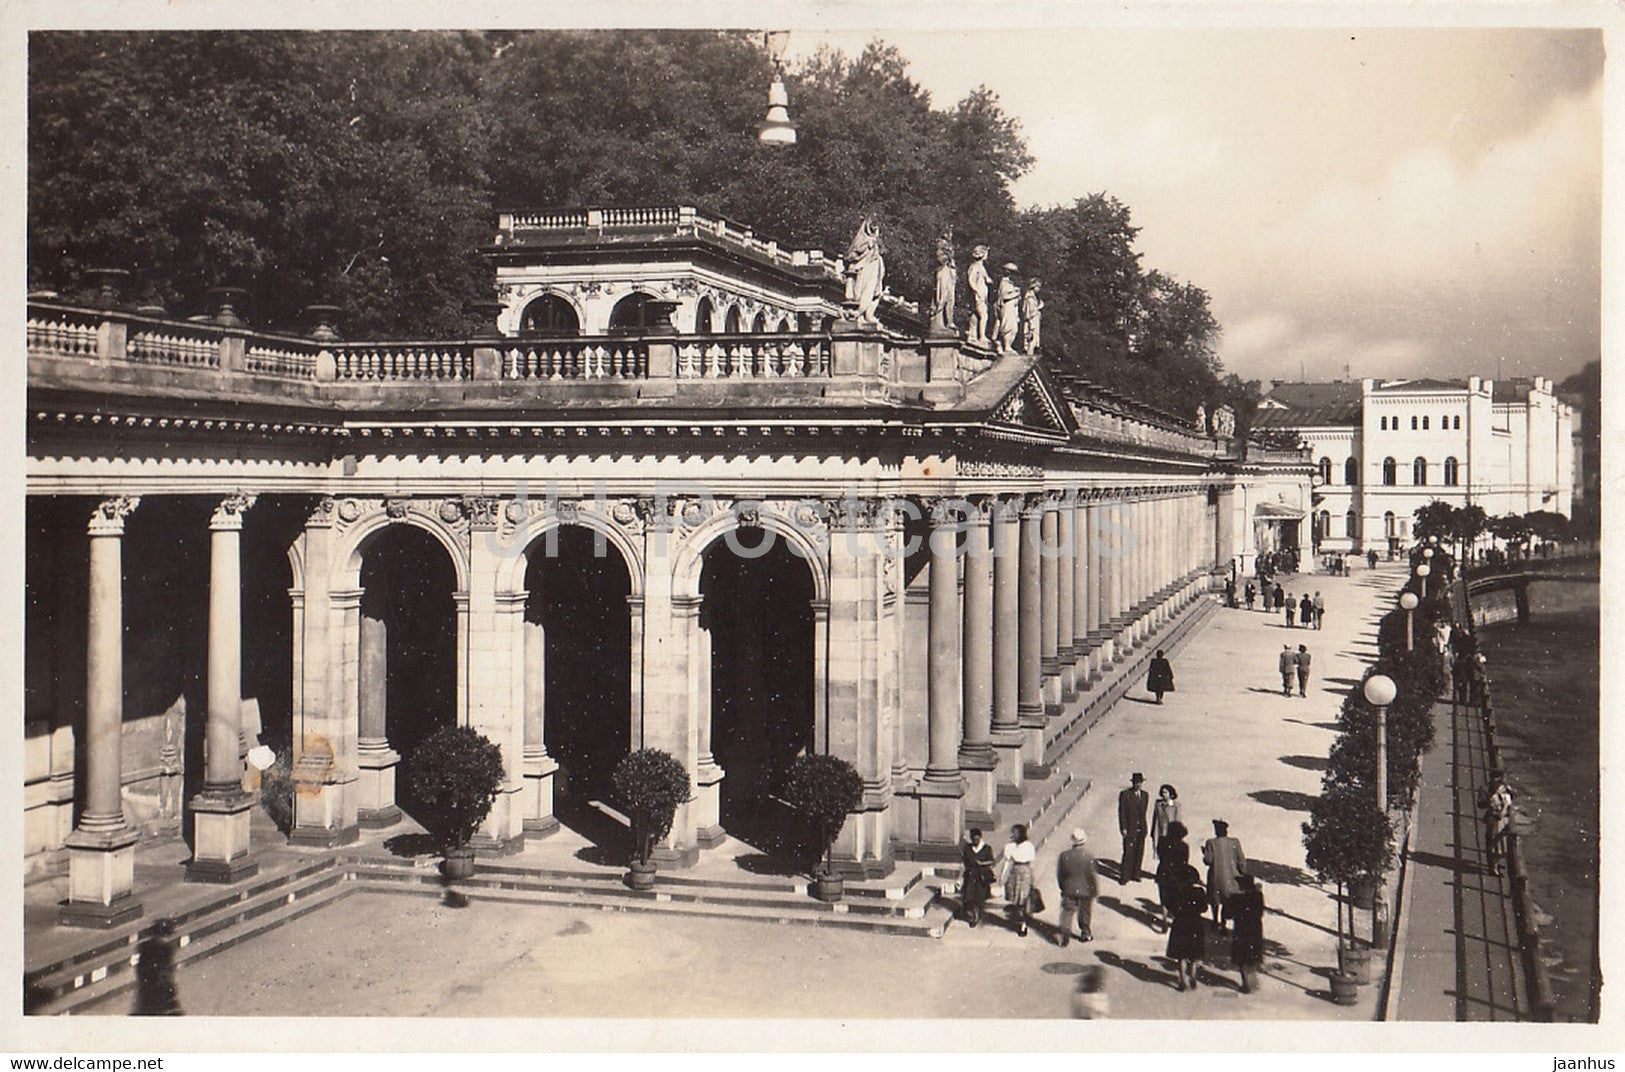 Karlovy Vary - Karlsbad - Mlynska kolonada - Mill Colonnade - old postcard - Czech Republic - unused - JH Postcards